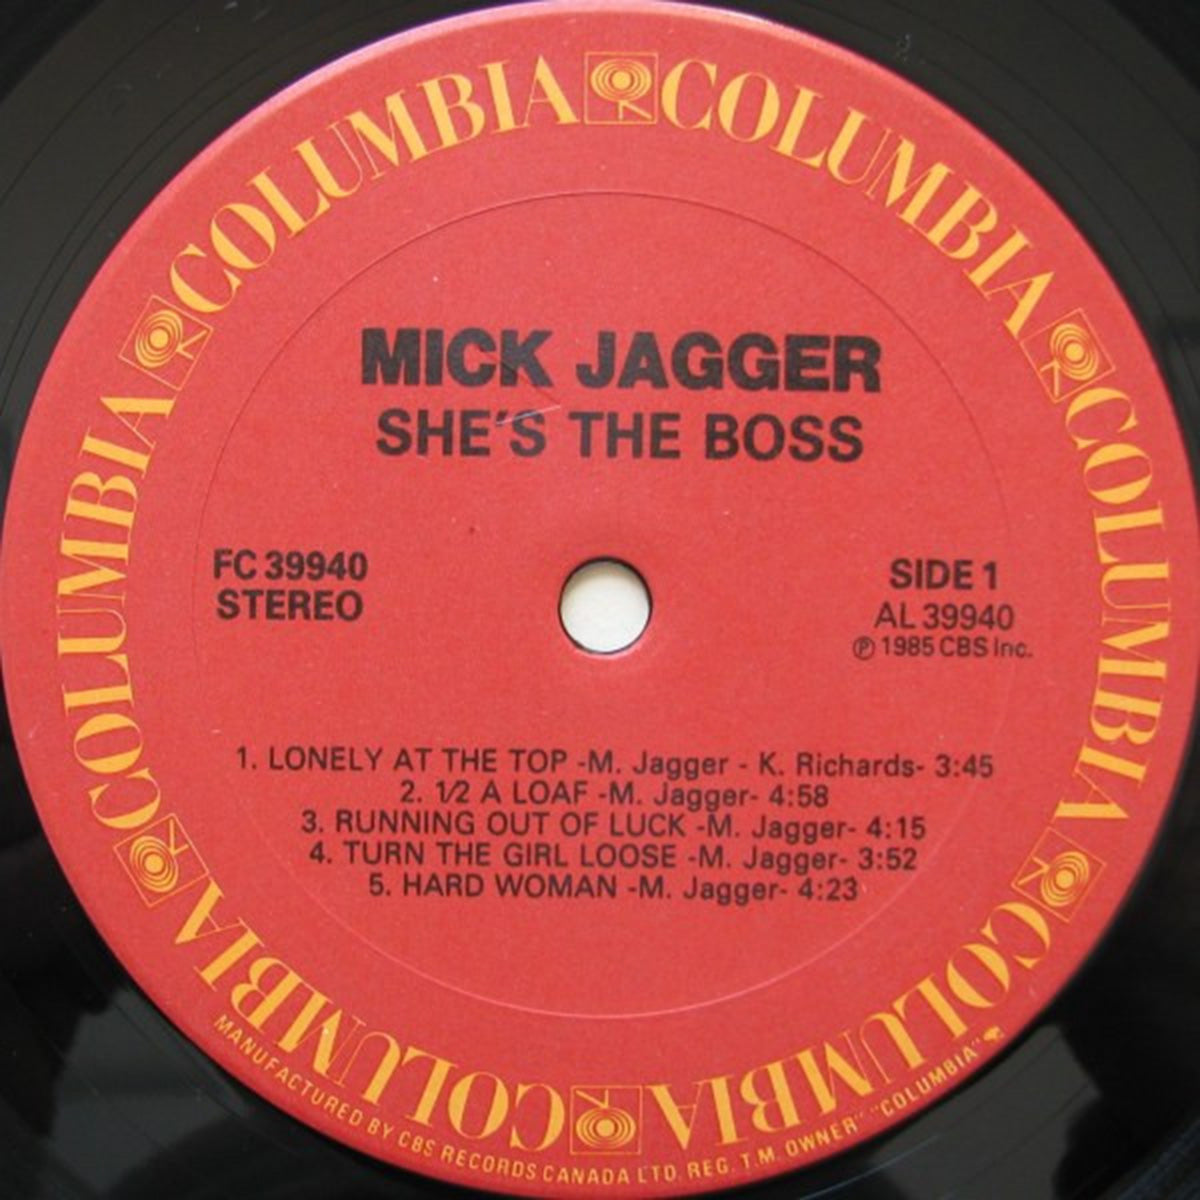 Mick Jagger – She's The Boss - 1985